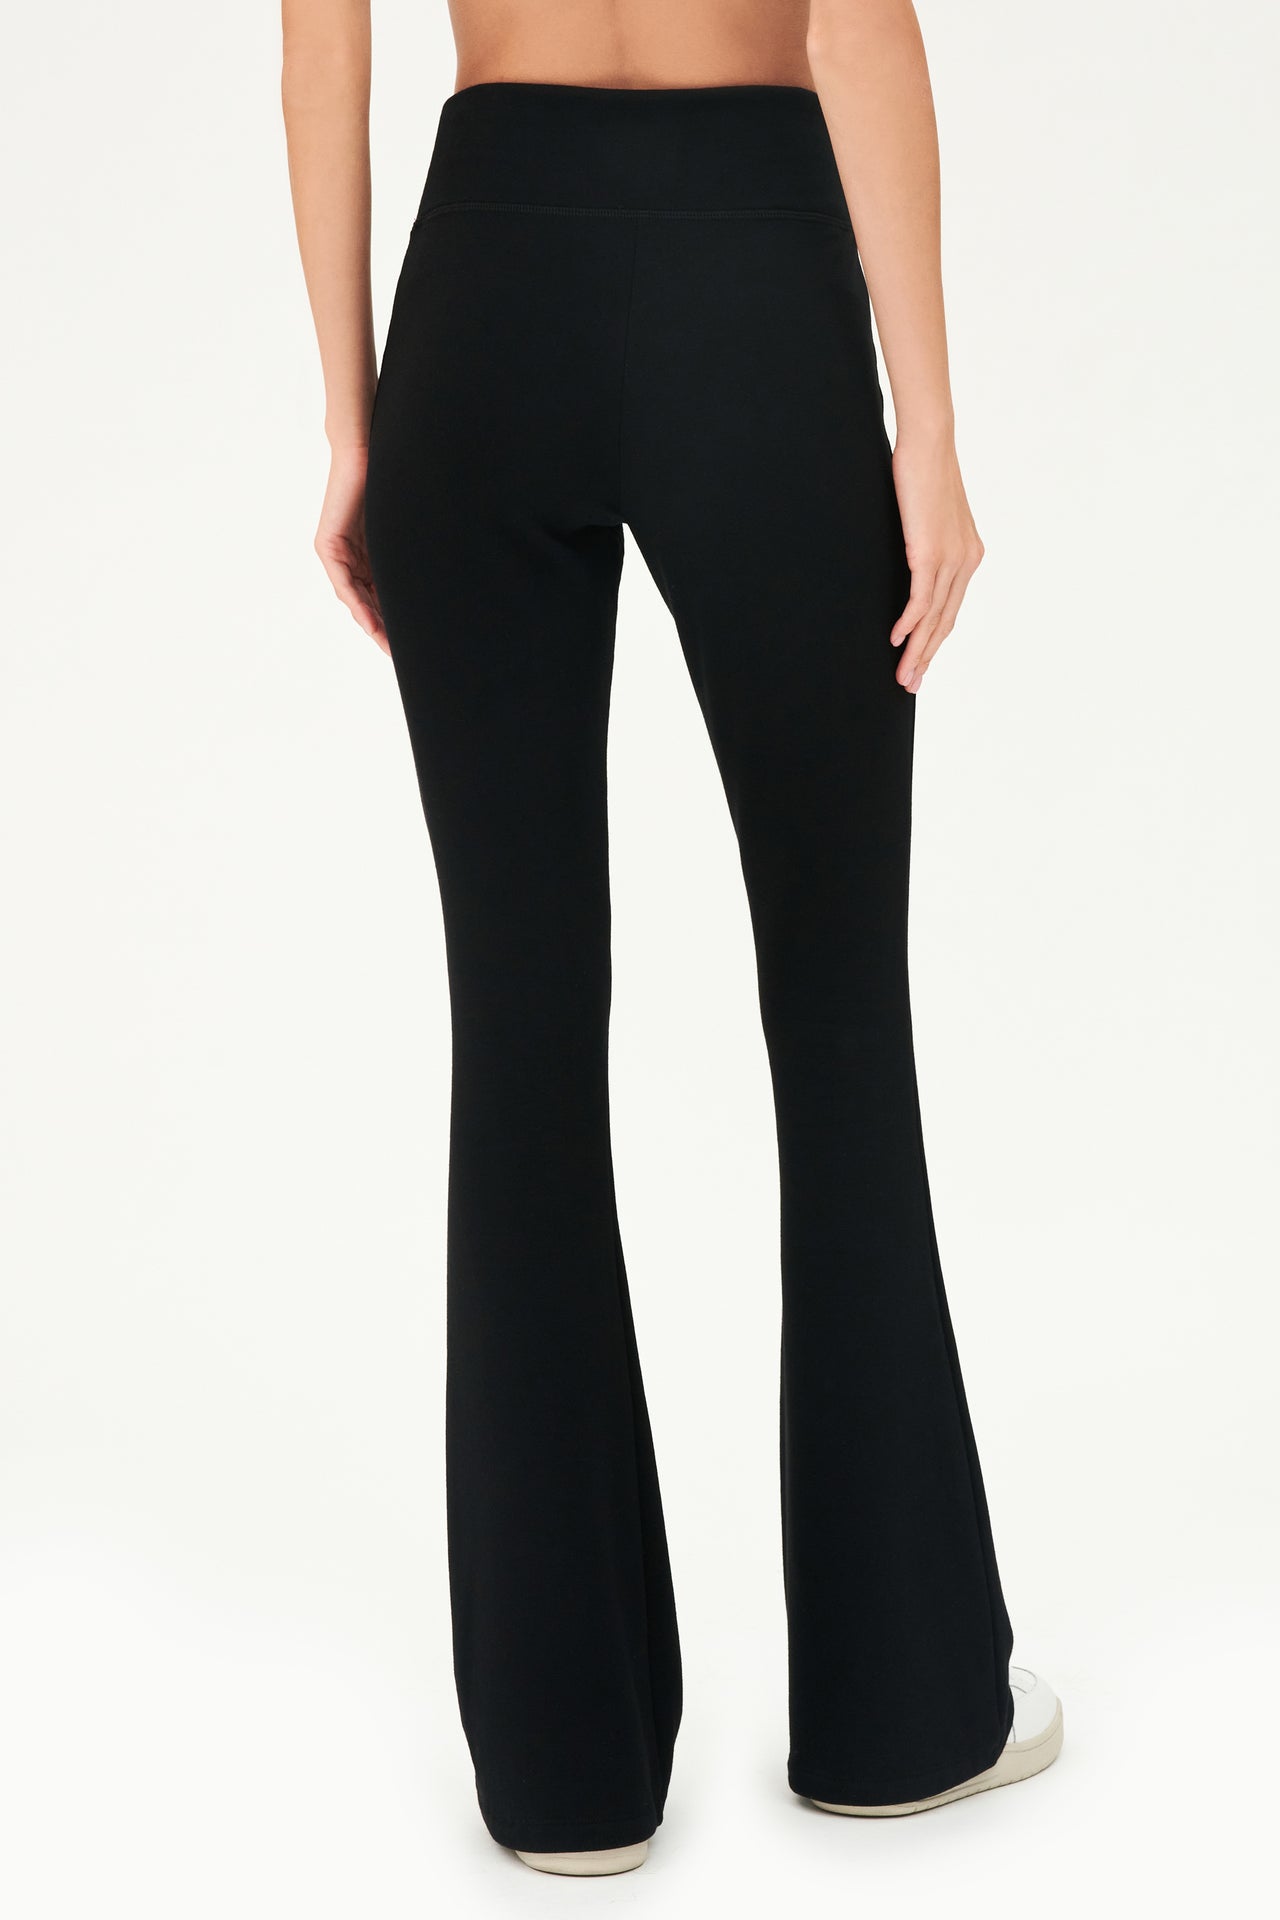 The back view of a woman wearing cozy, black SPLITS59 Raquel Fleece Flare pants.